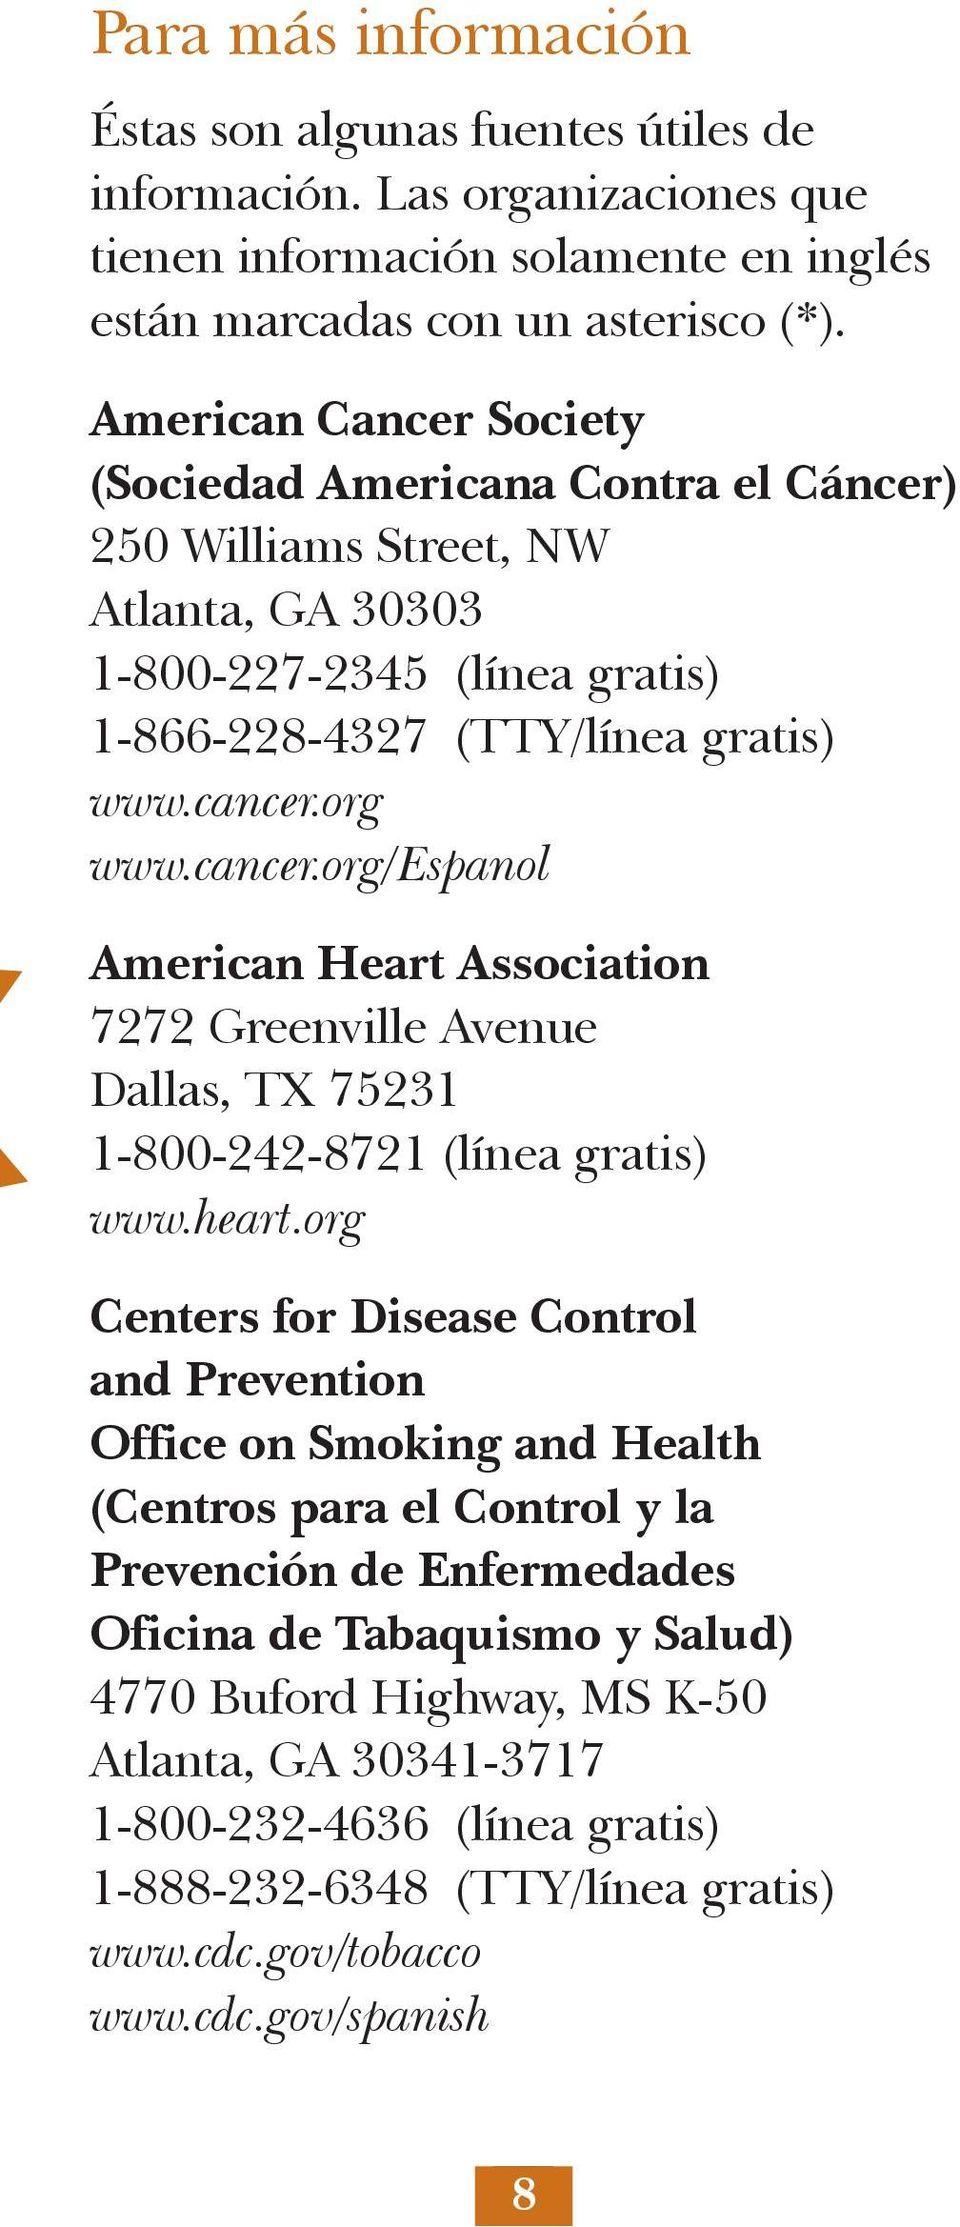 org www.cancer.org/espanol American Heart Association 7272 Greenville Avenue Dallas, TX 75231 1-800-242-8721 (línea gratis) www.heart.